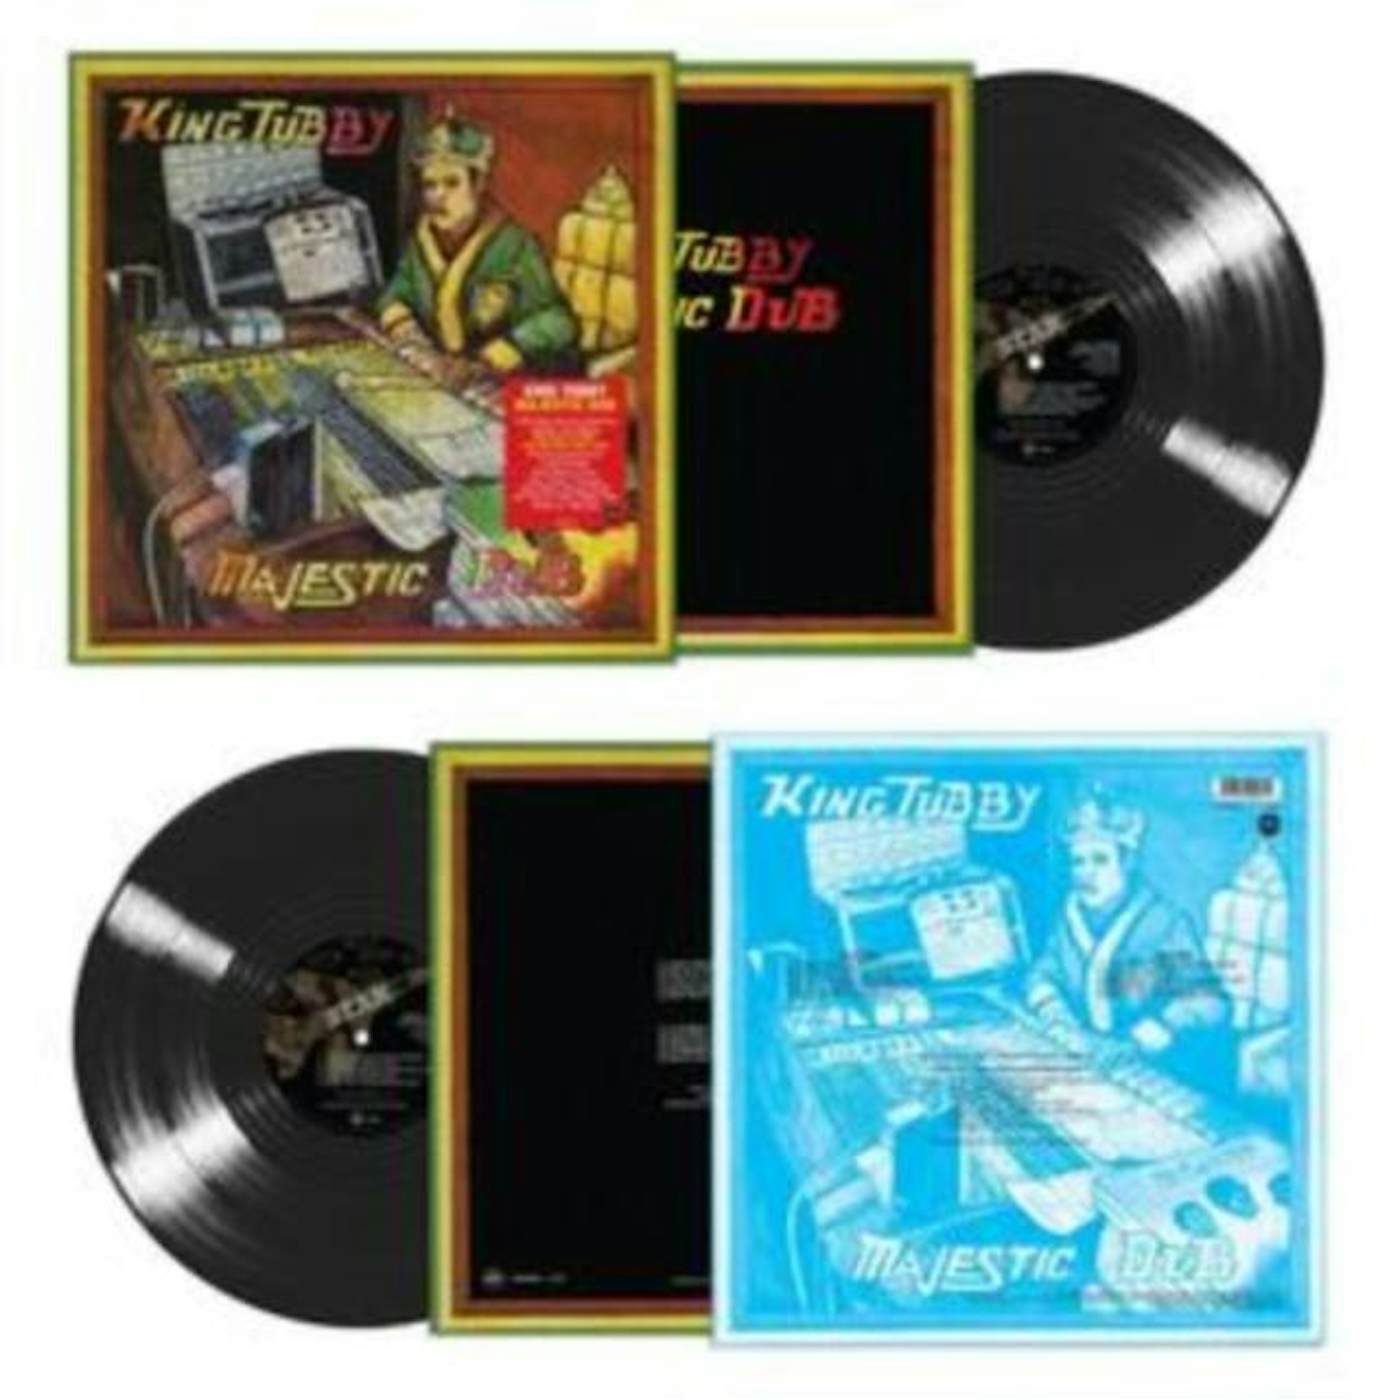 King Tubby LP Vinyl Record - Majestic Dub